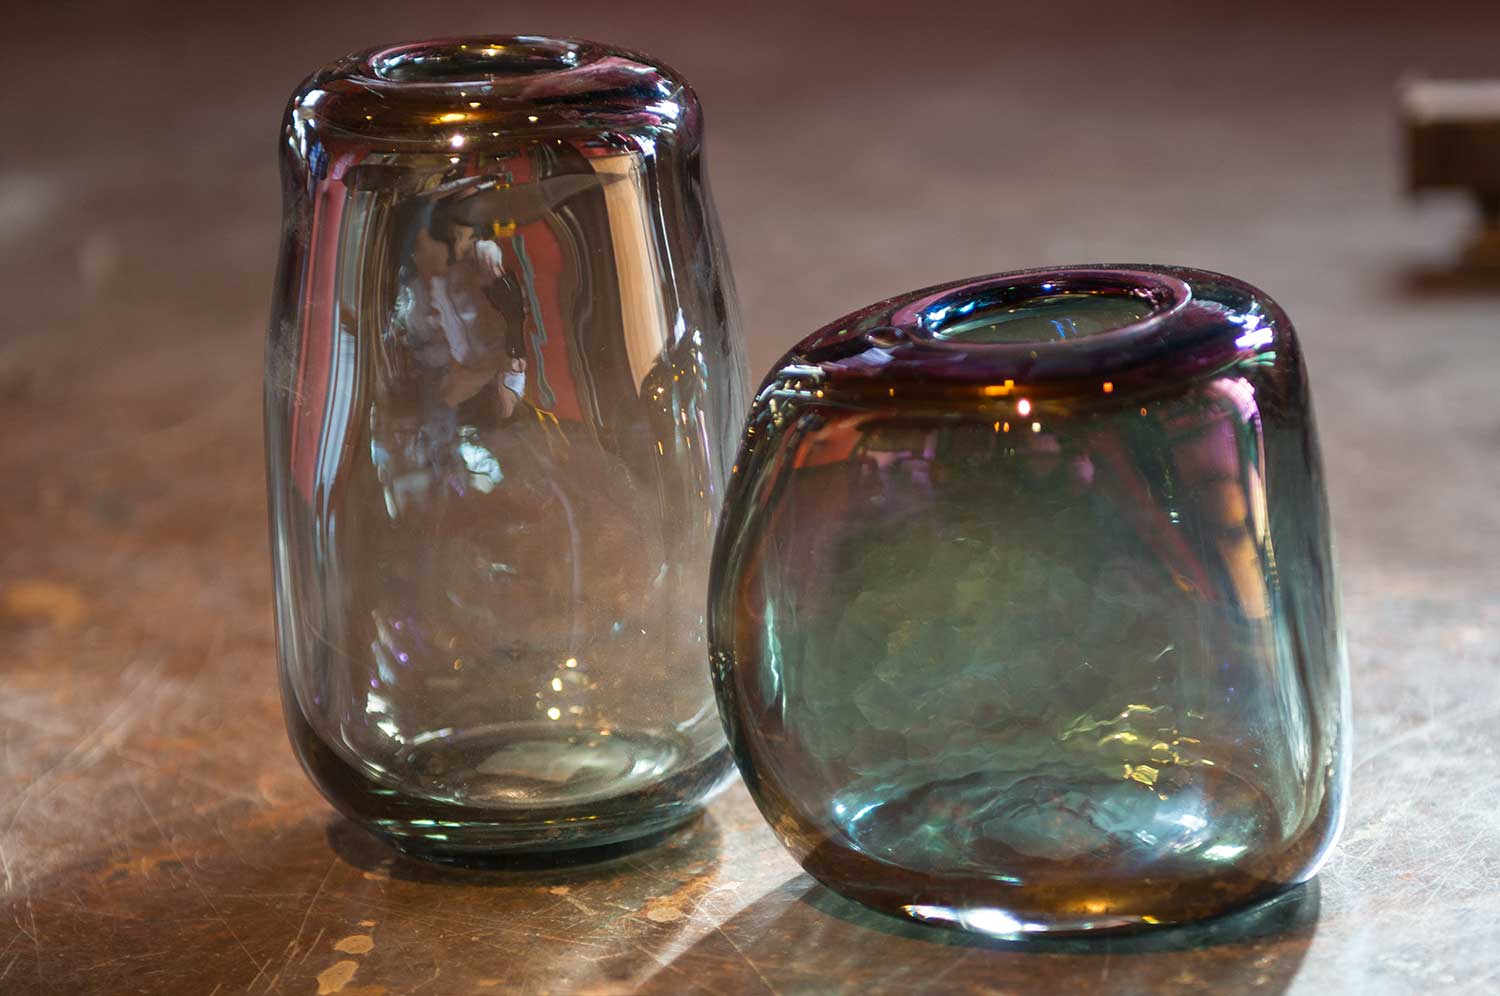 Two iridized glass vases